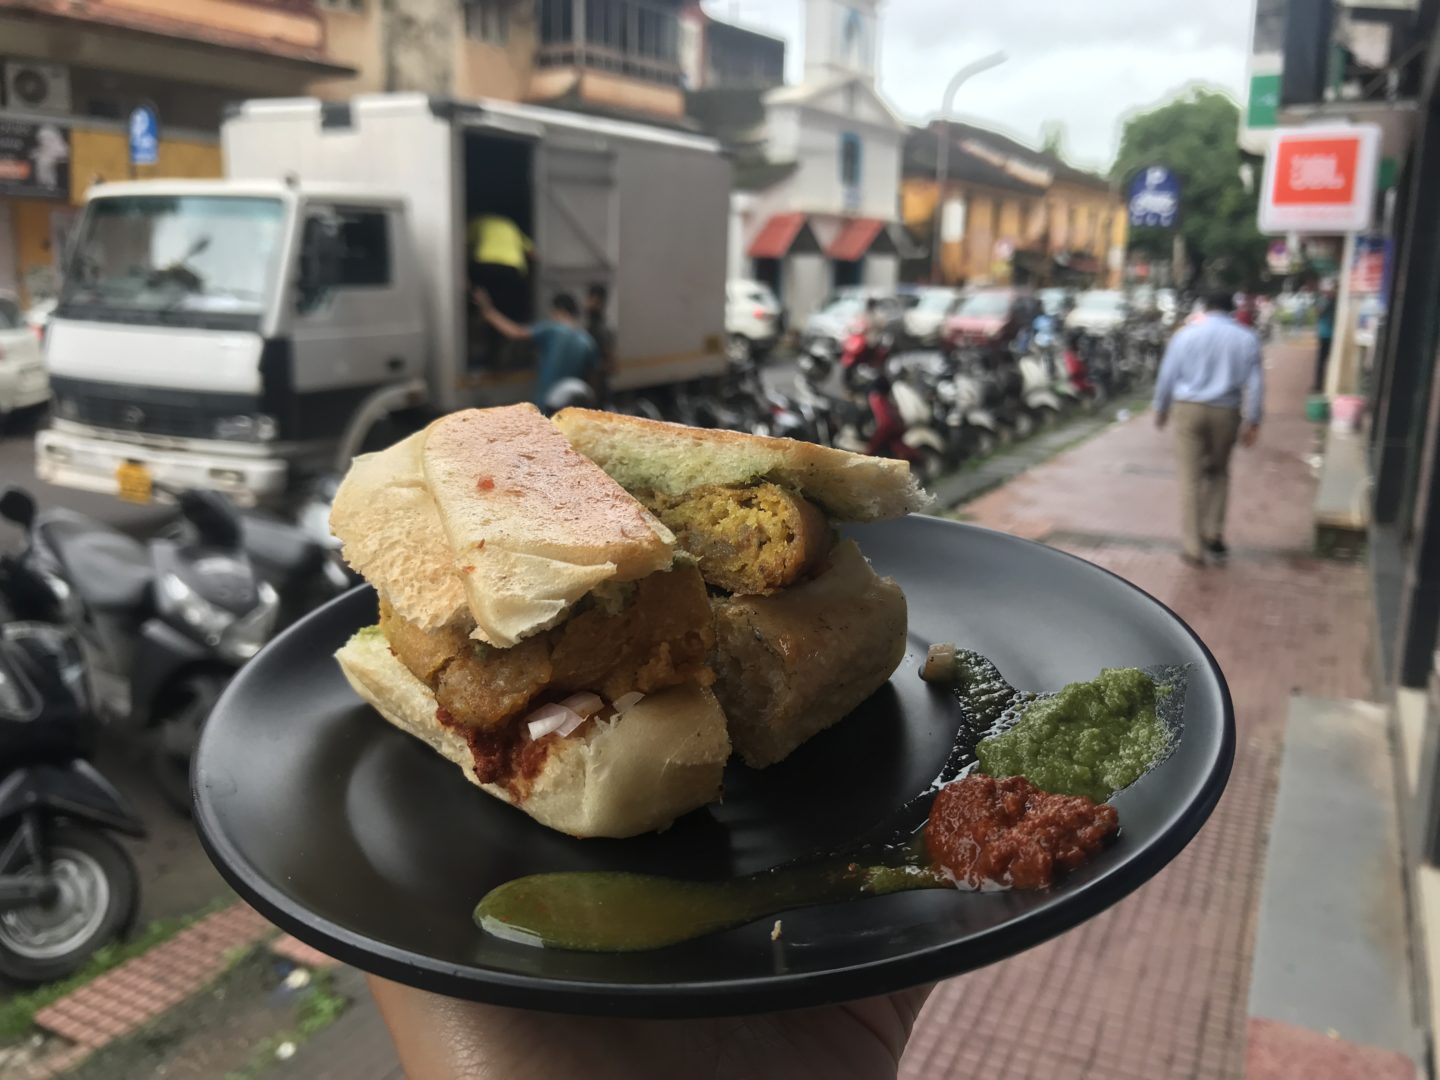 Where to get Mumbai’s Delicious Street Food in Goa